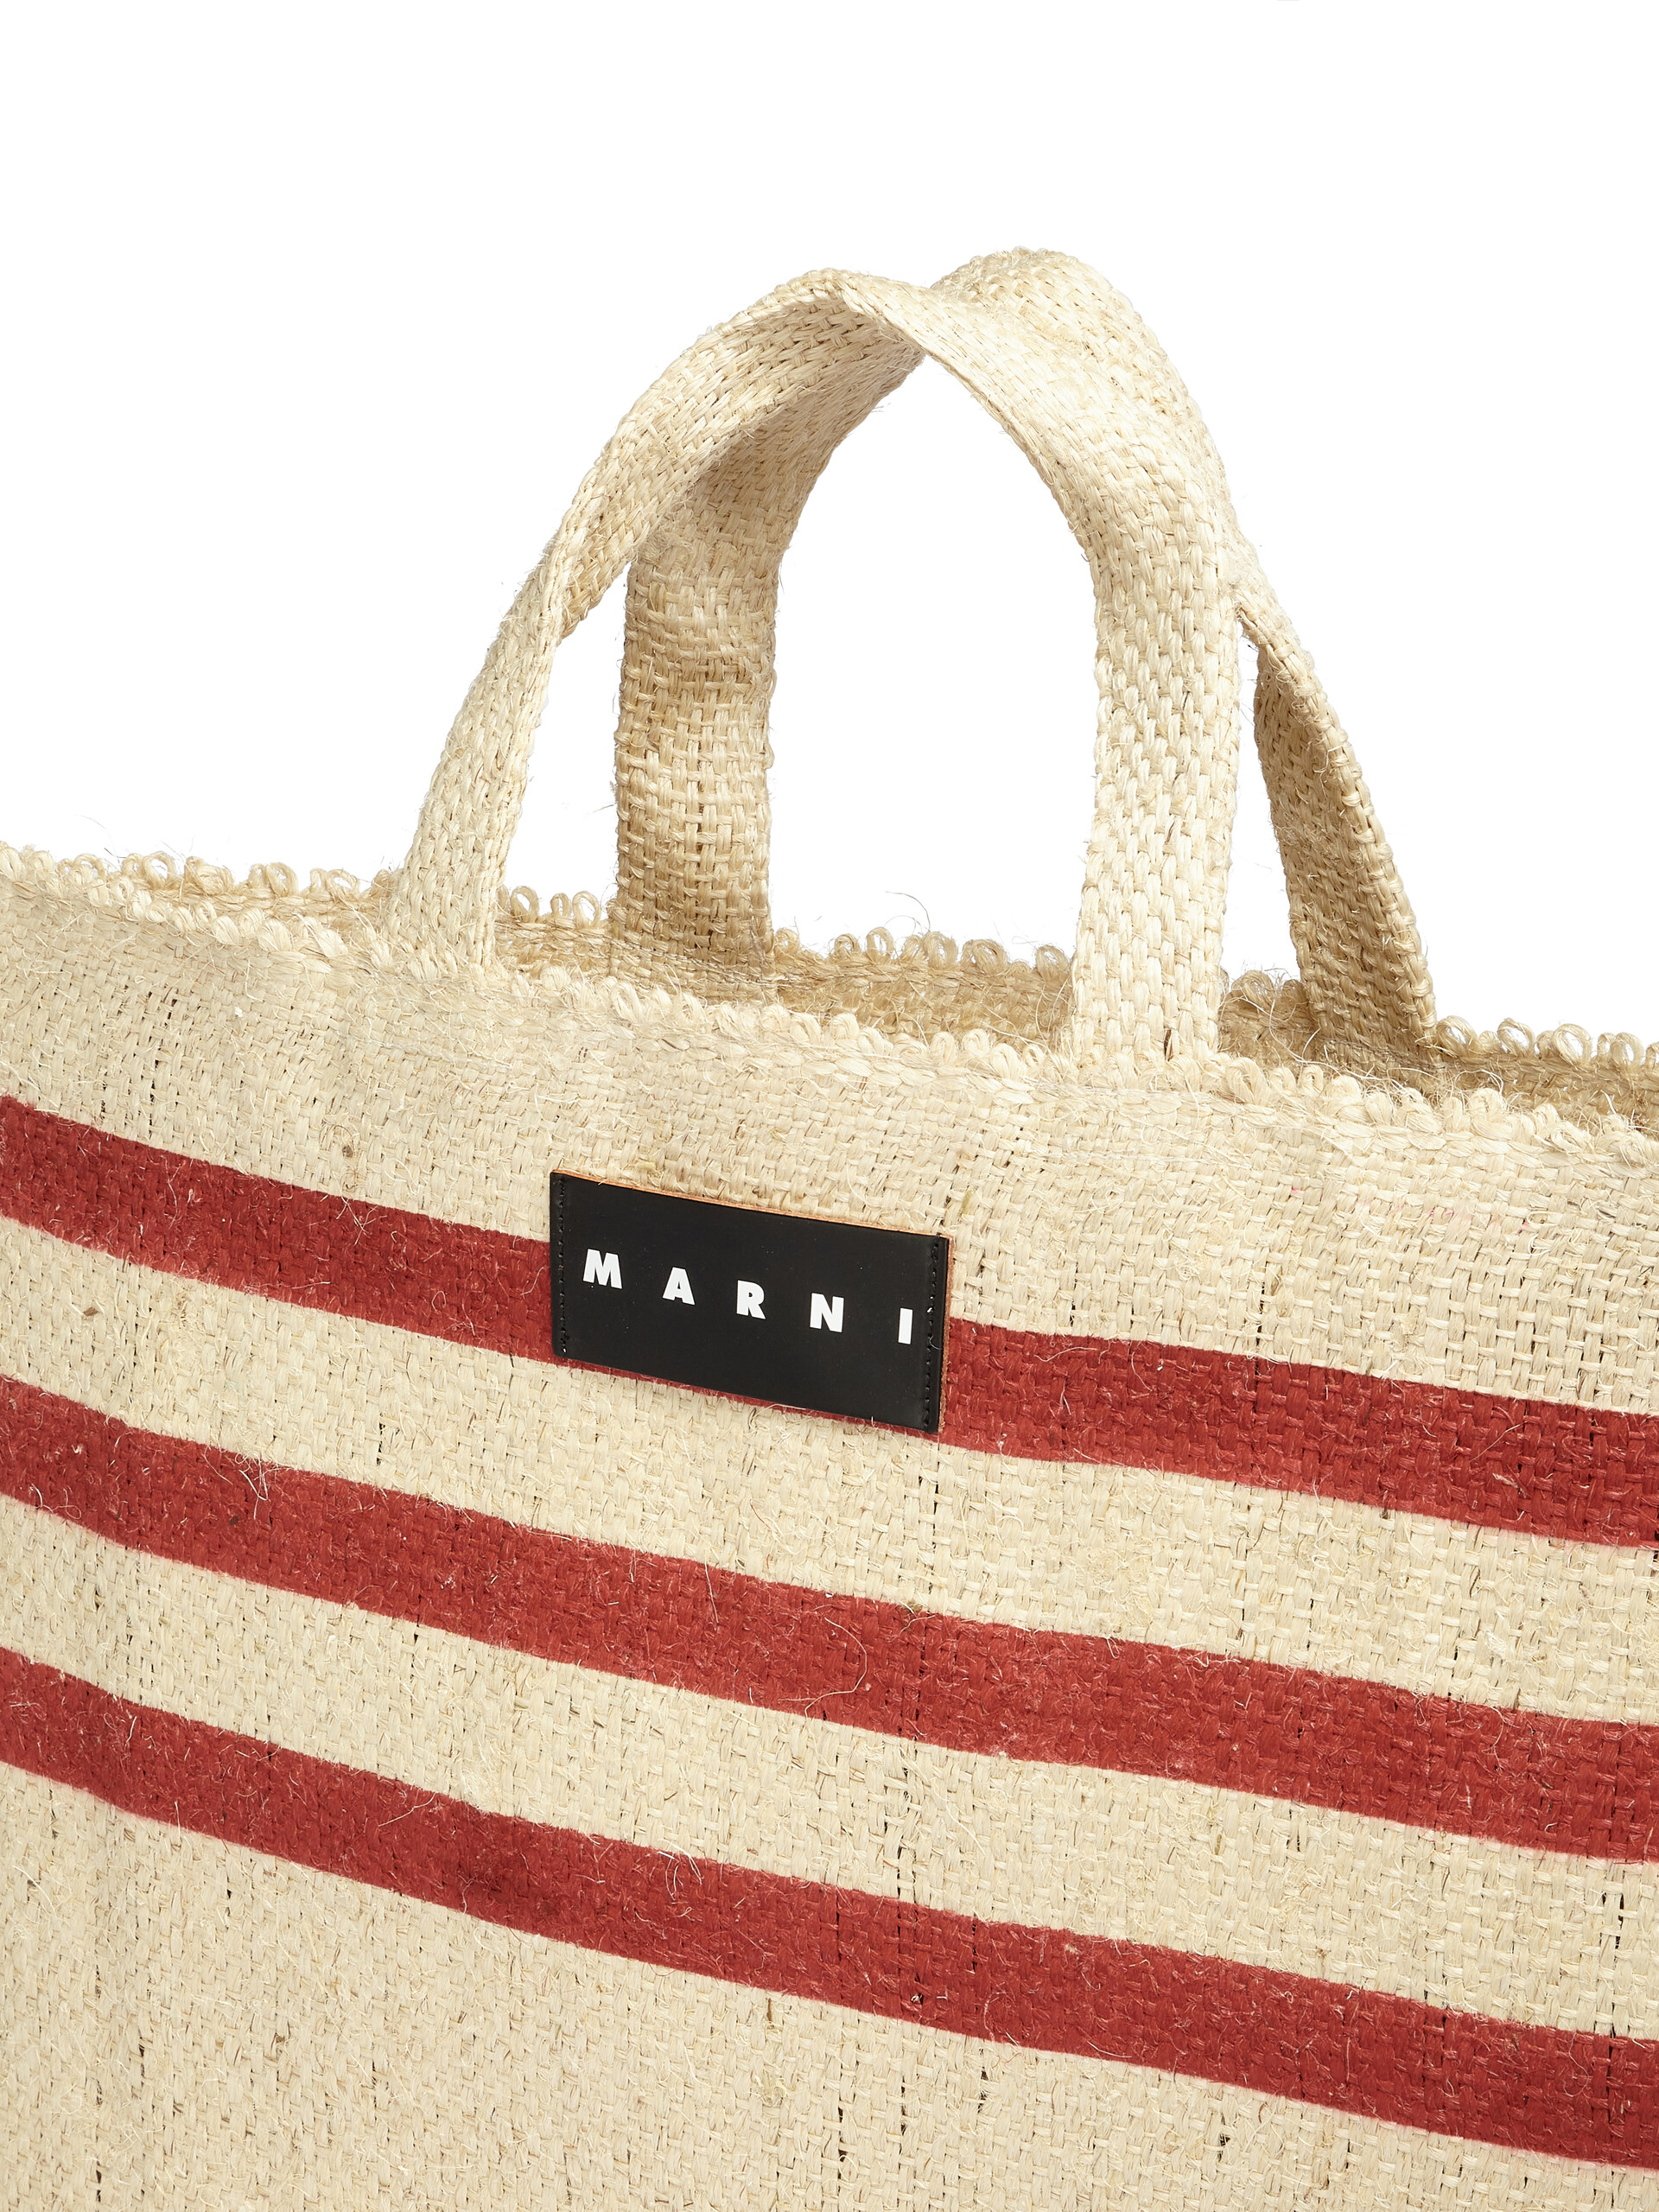 MARNI MARKET large bag in red natural fiber - Bags - Image 4